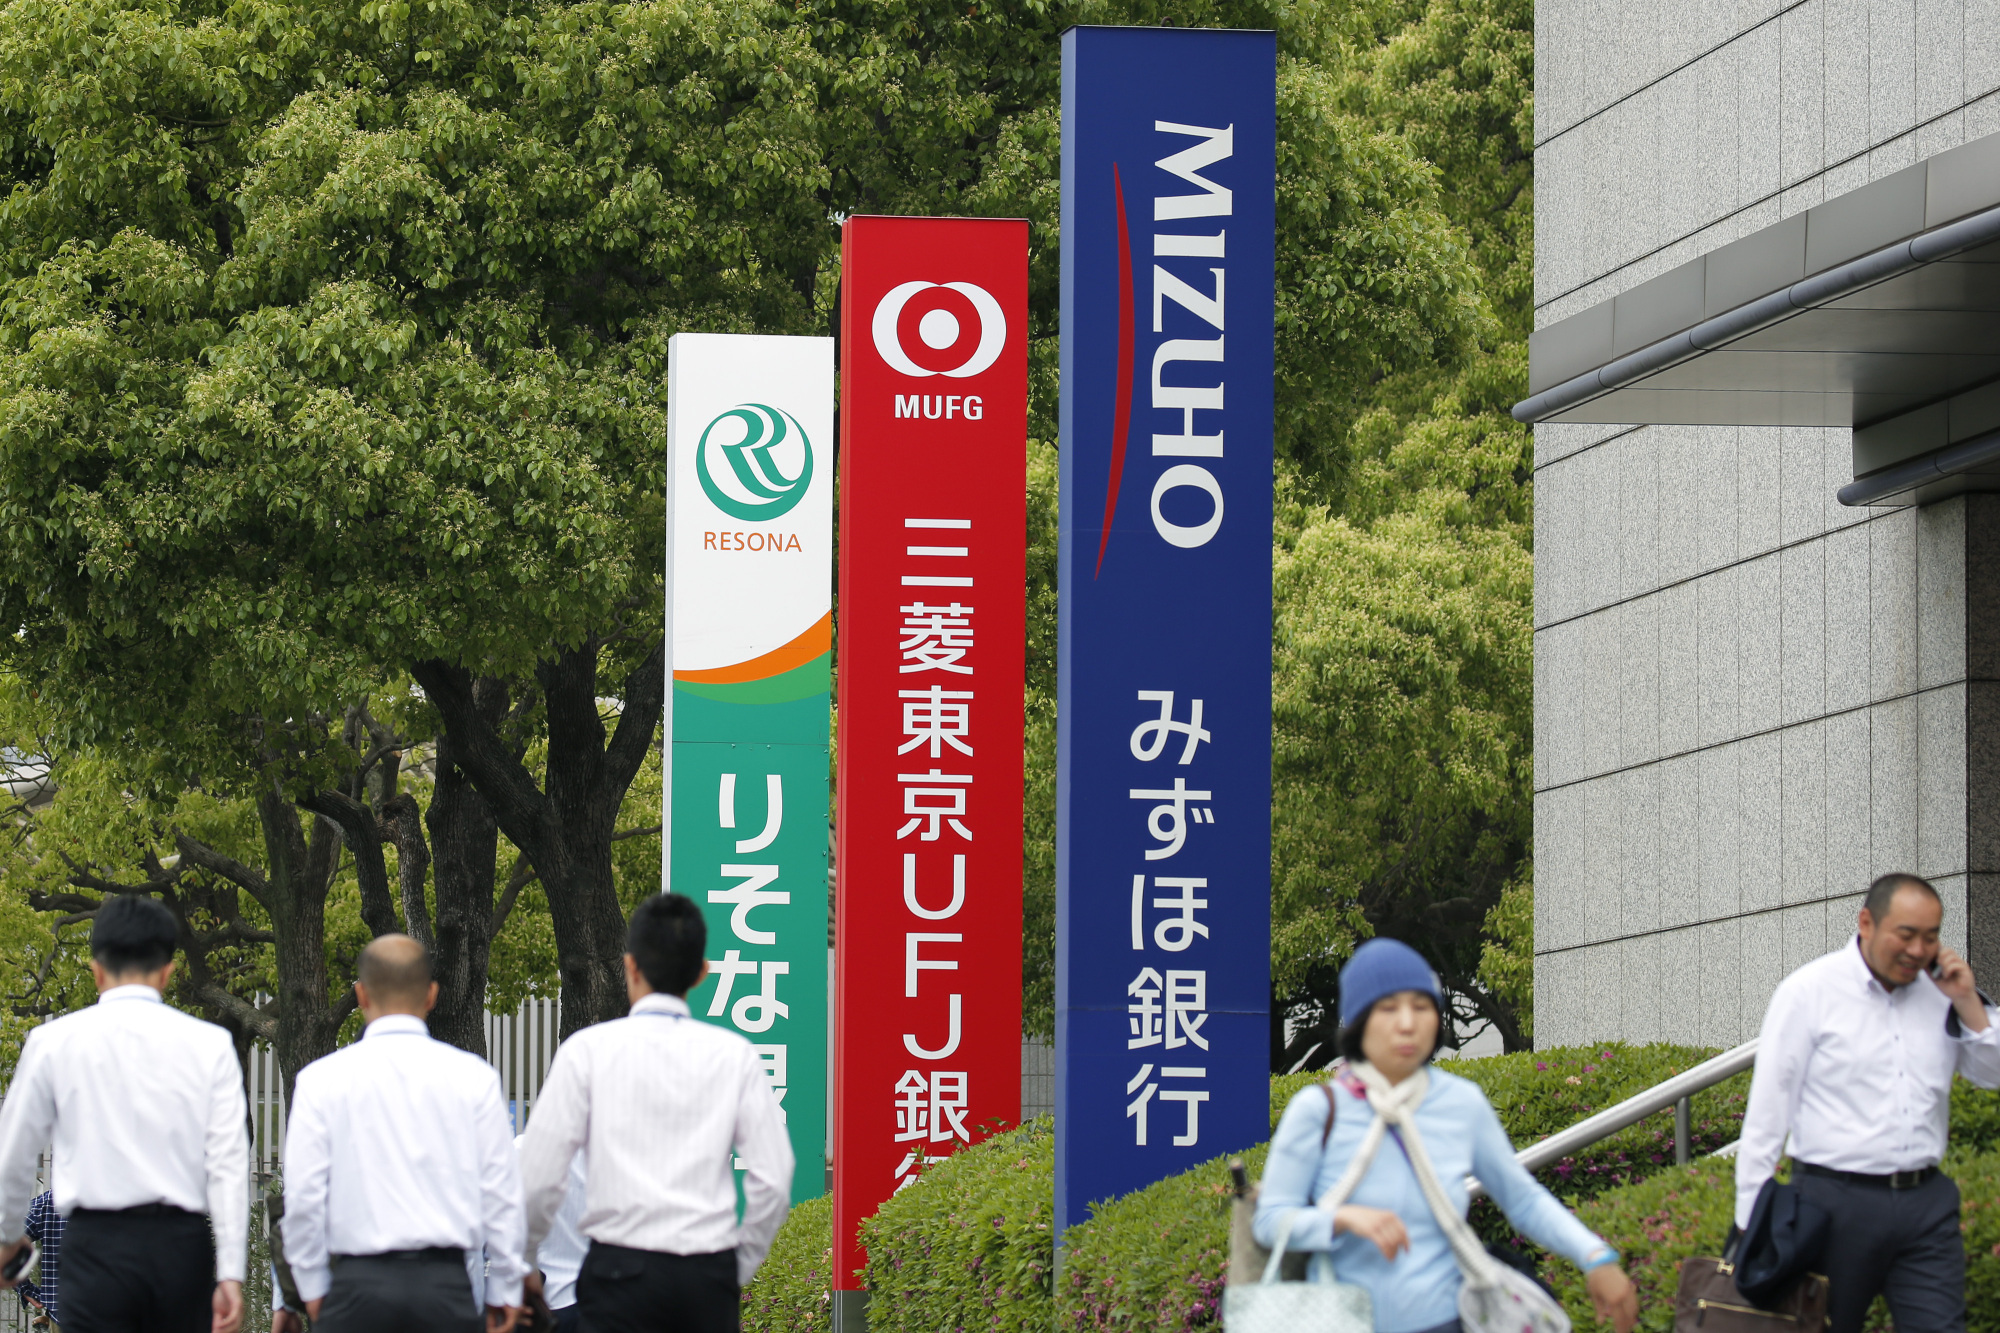 Pedestrians walk past signs for Resona Bank Ltd., Bank of Tokyo Mitsubishi UFJ Ltd. and Mizuho Bank Ltd. in Tokyo in May 2015. | BLOOMBERG